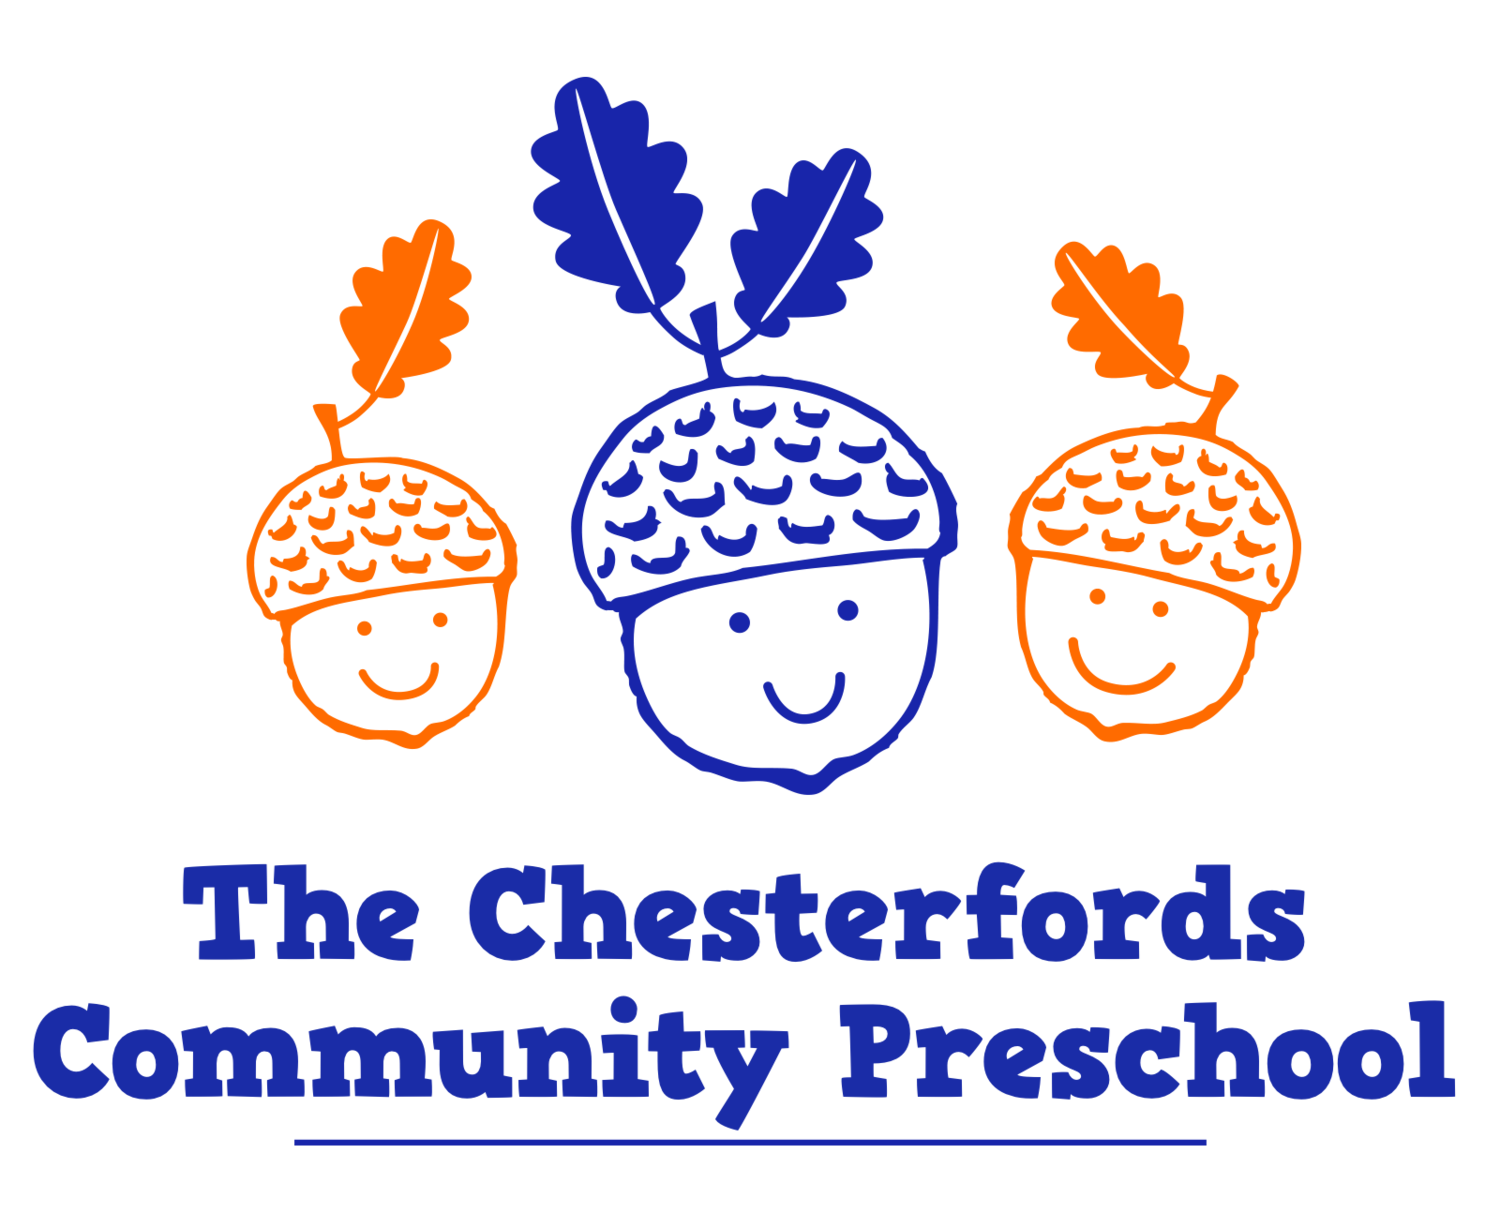 The Chesterfords Community Preschool